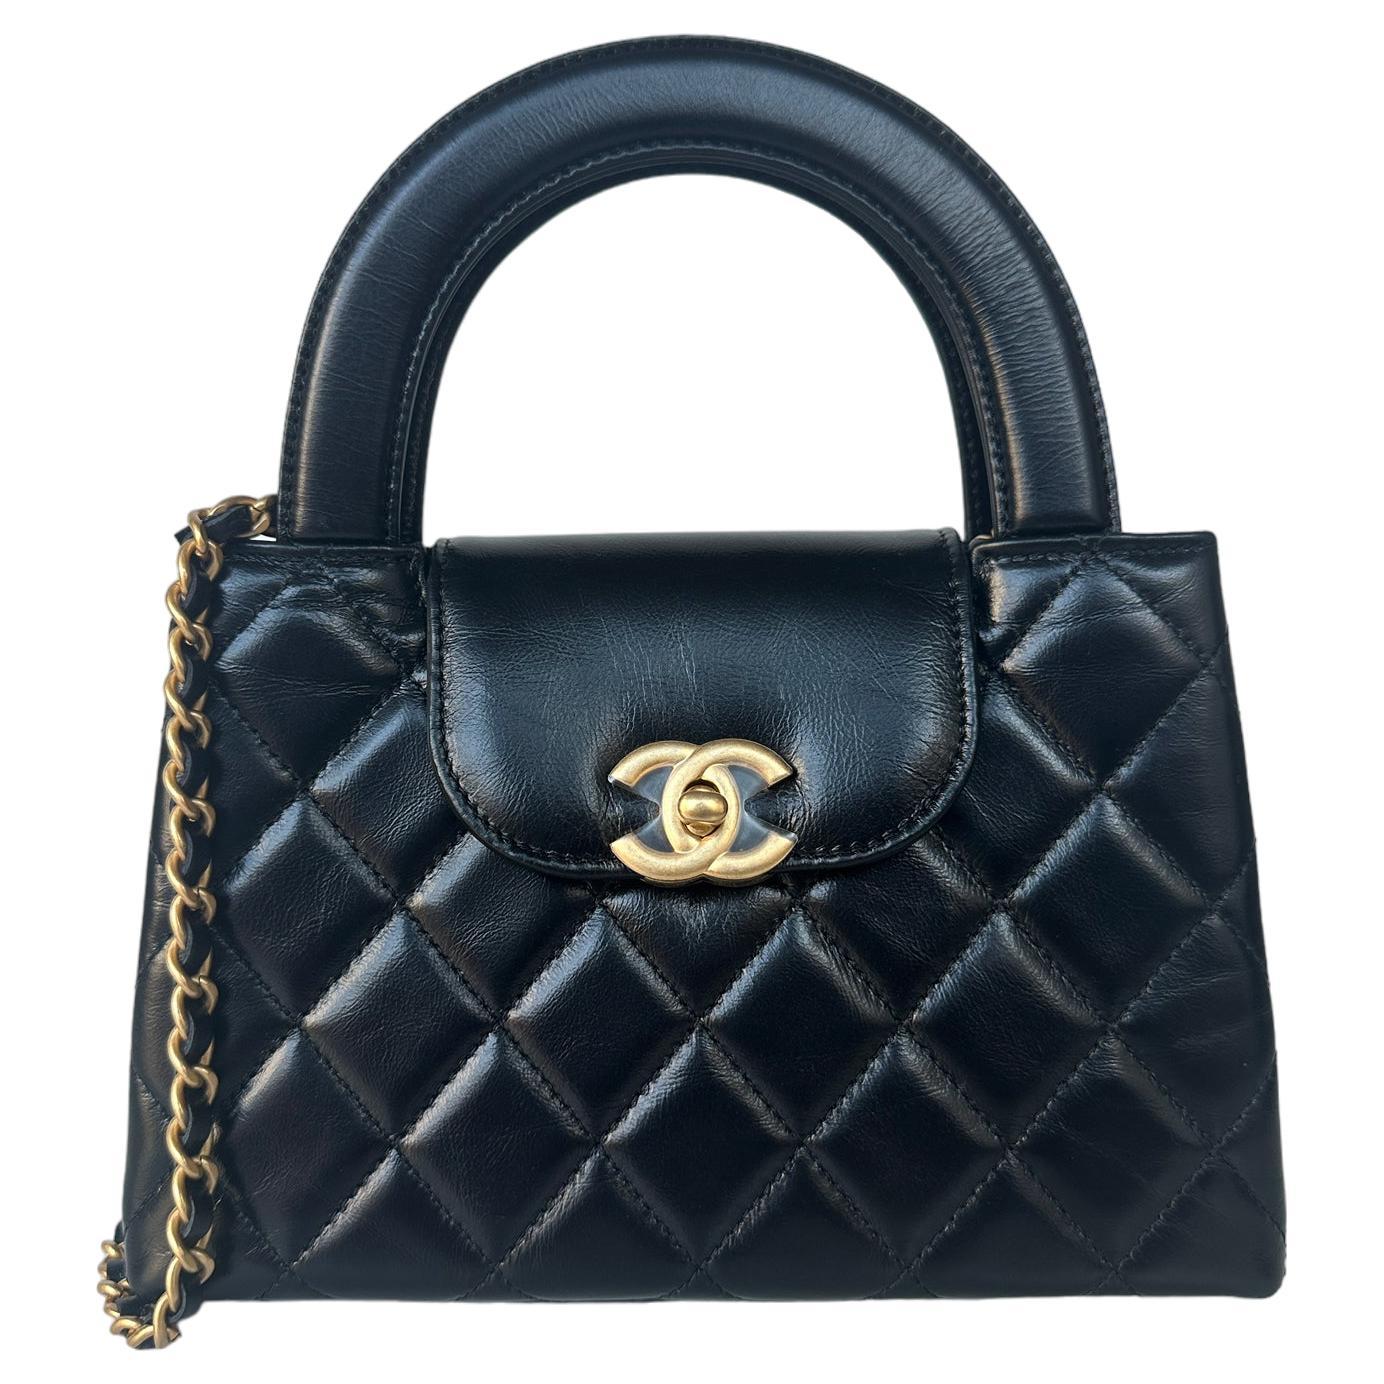 Chanel Black Calfskin Quilted Nano Kelly Shopper Bag